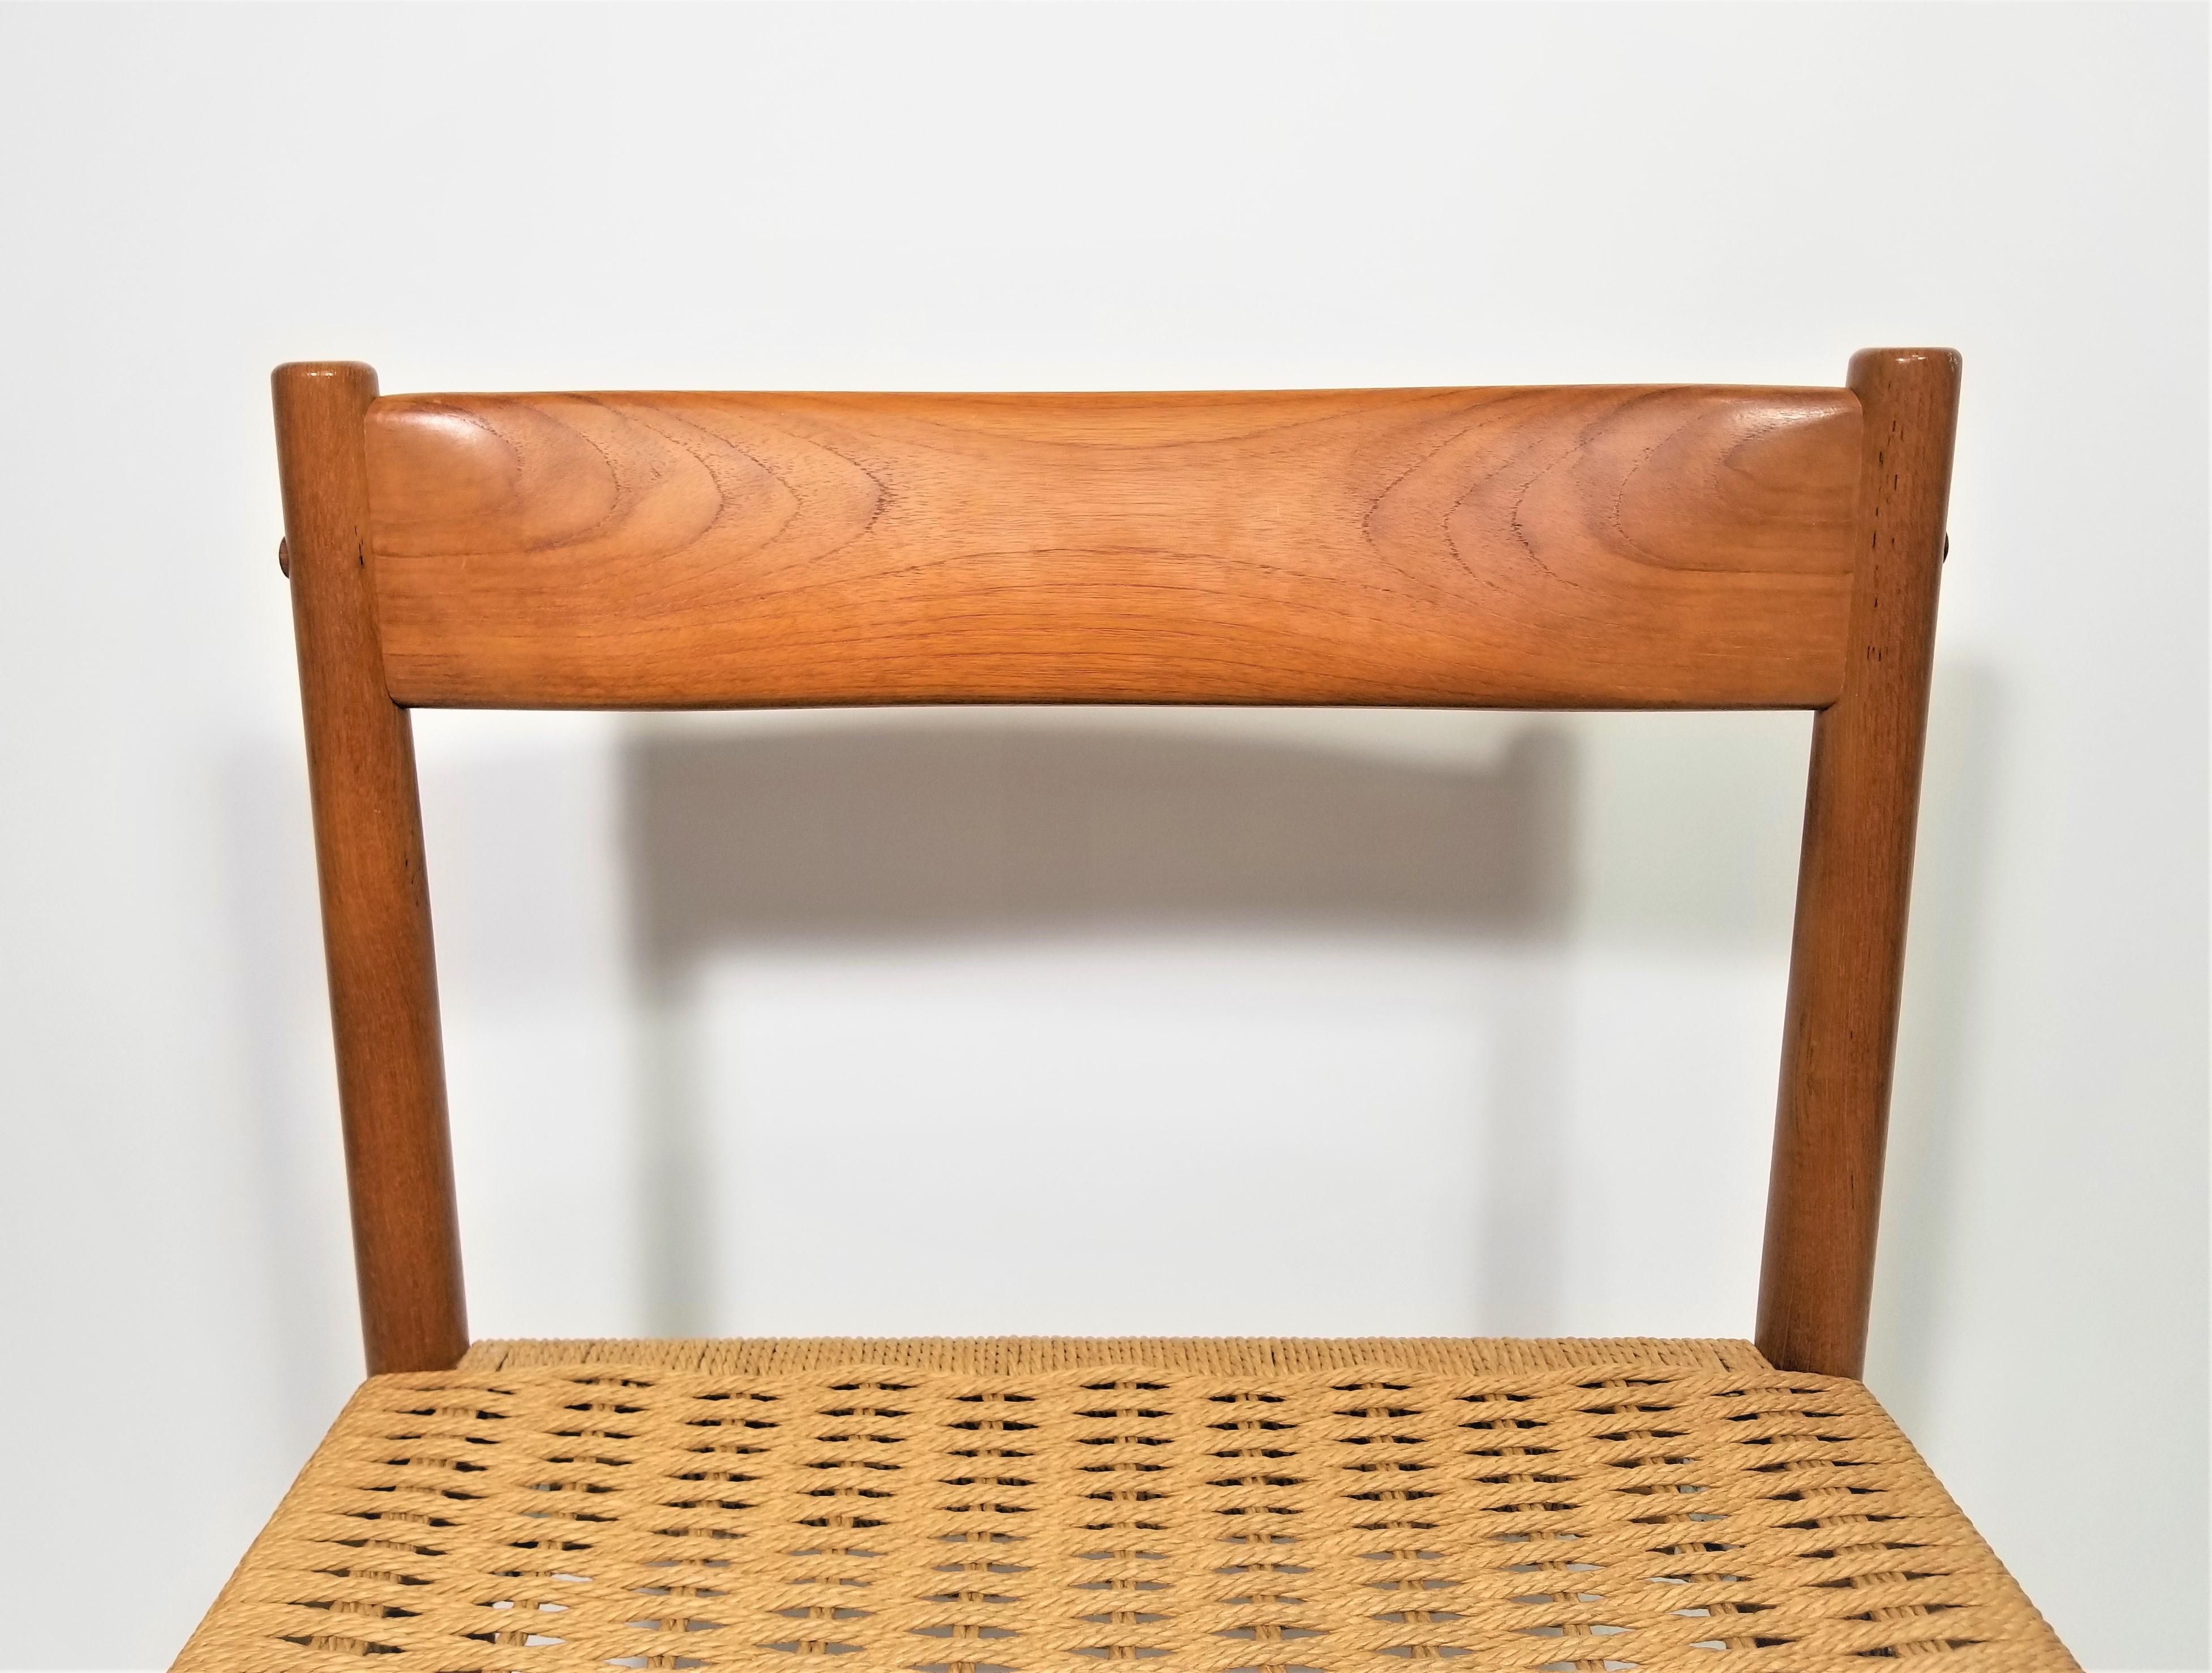 Poul Volther for Frem Rojle Danish Teak Woven Chair Midcentury 1960s  For Sale 4